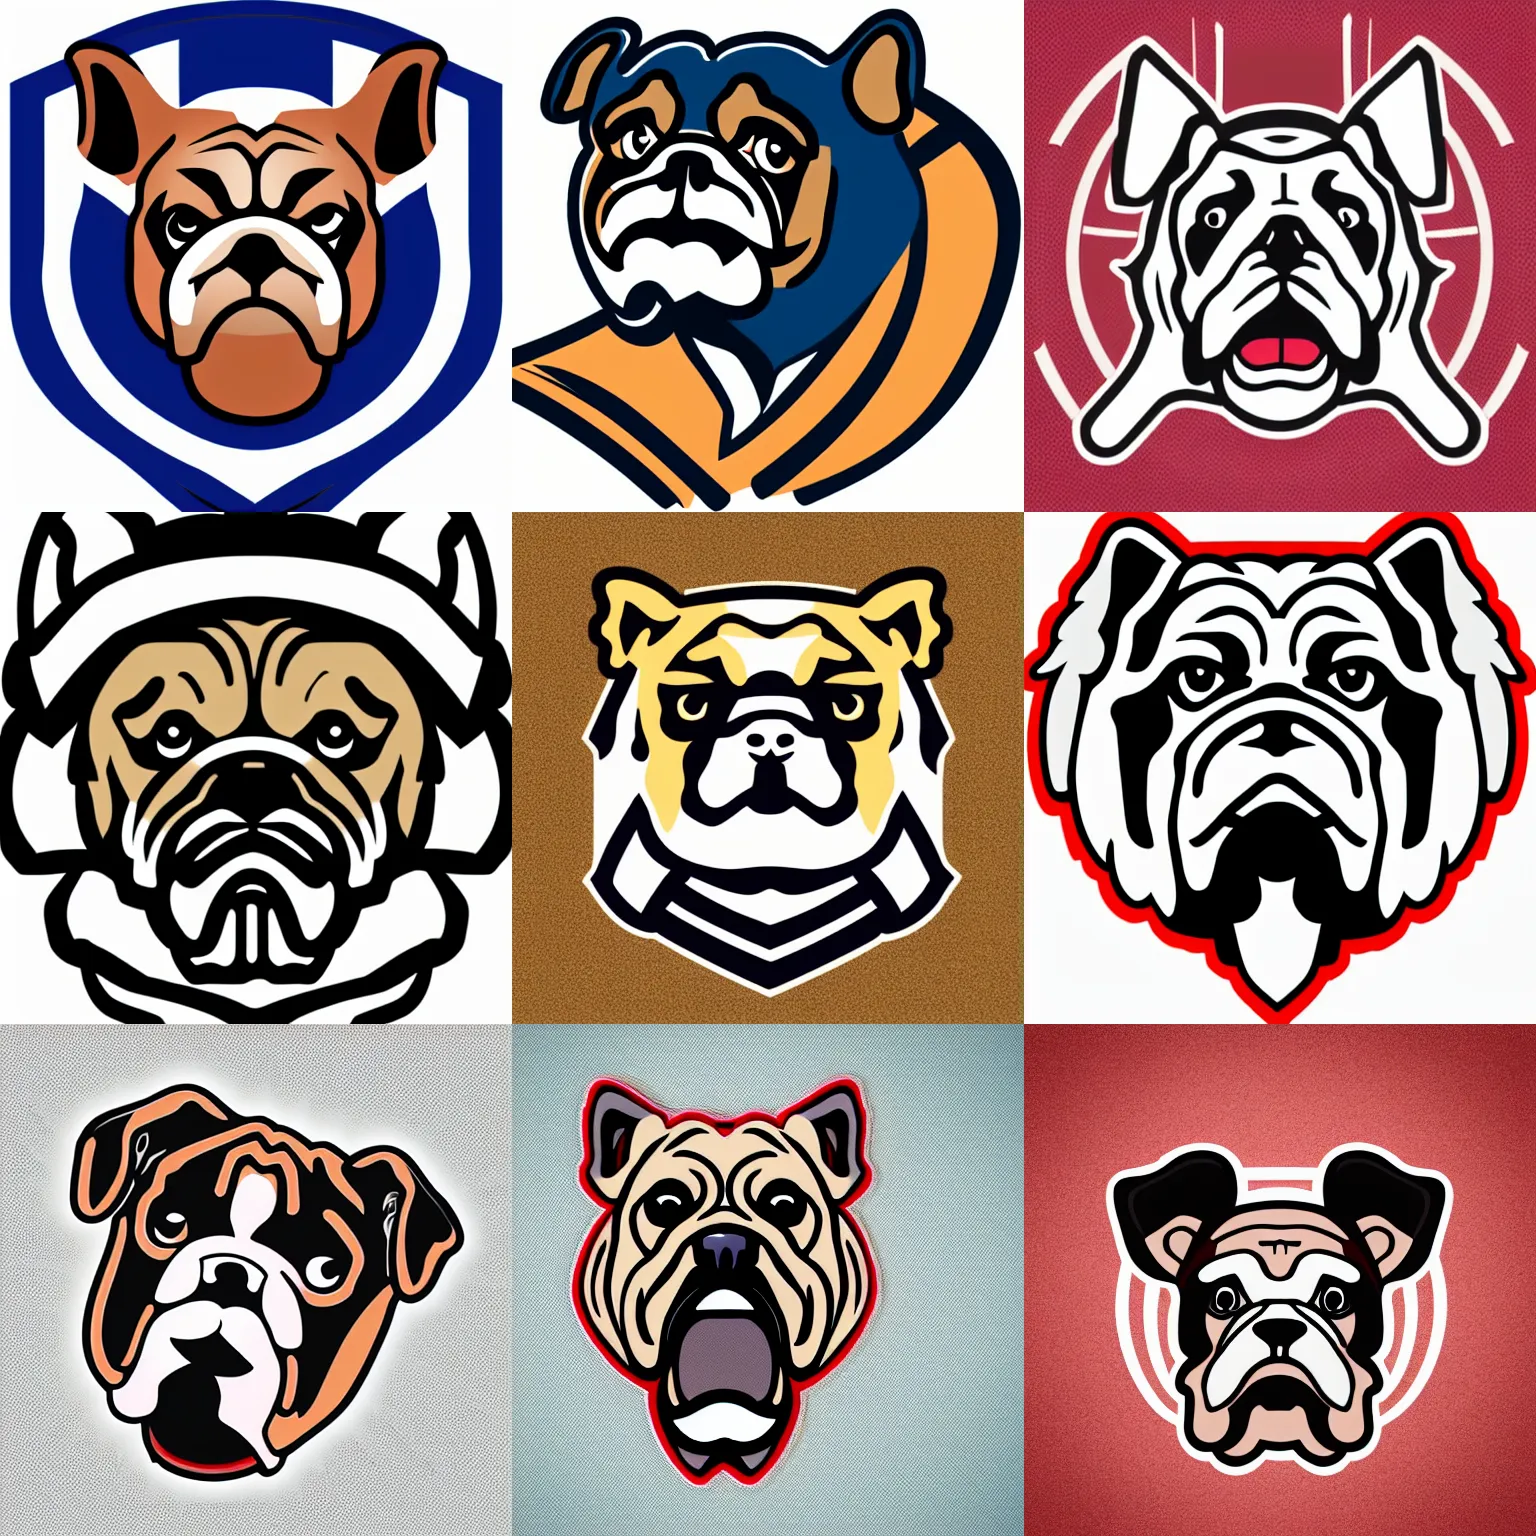 Prompt: NBA style bulldog mascot, vector logo